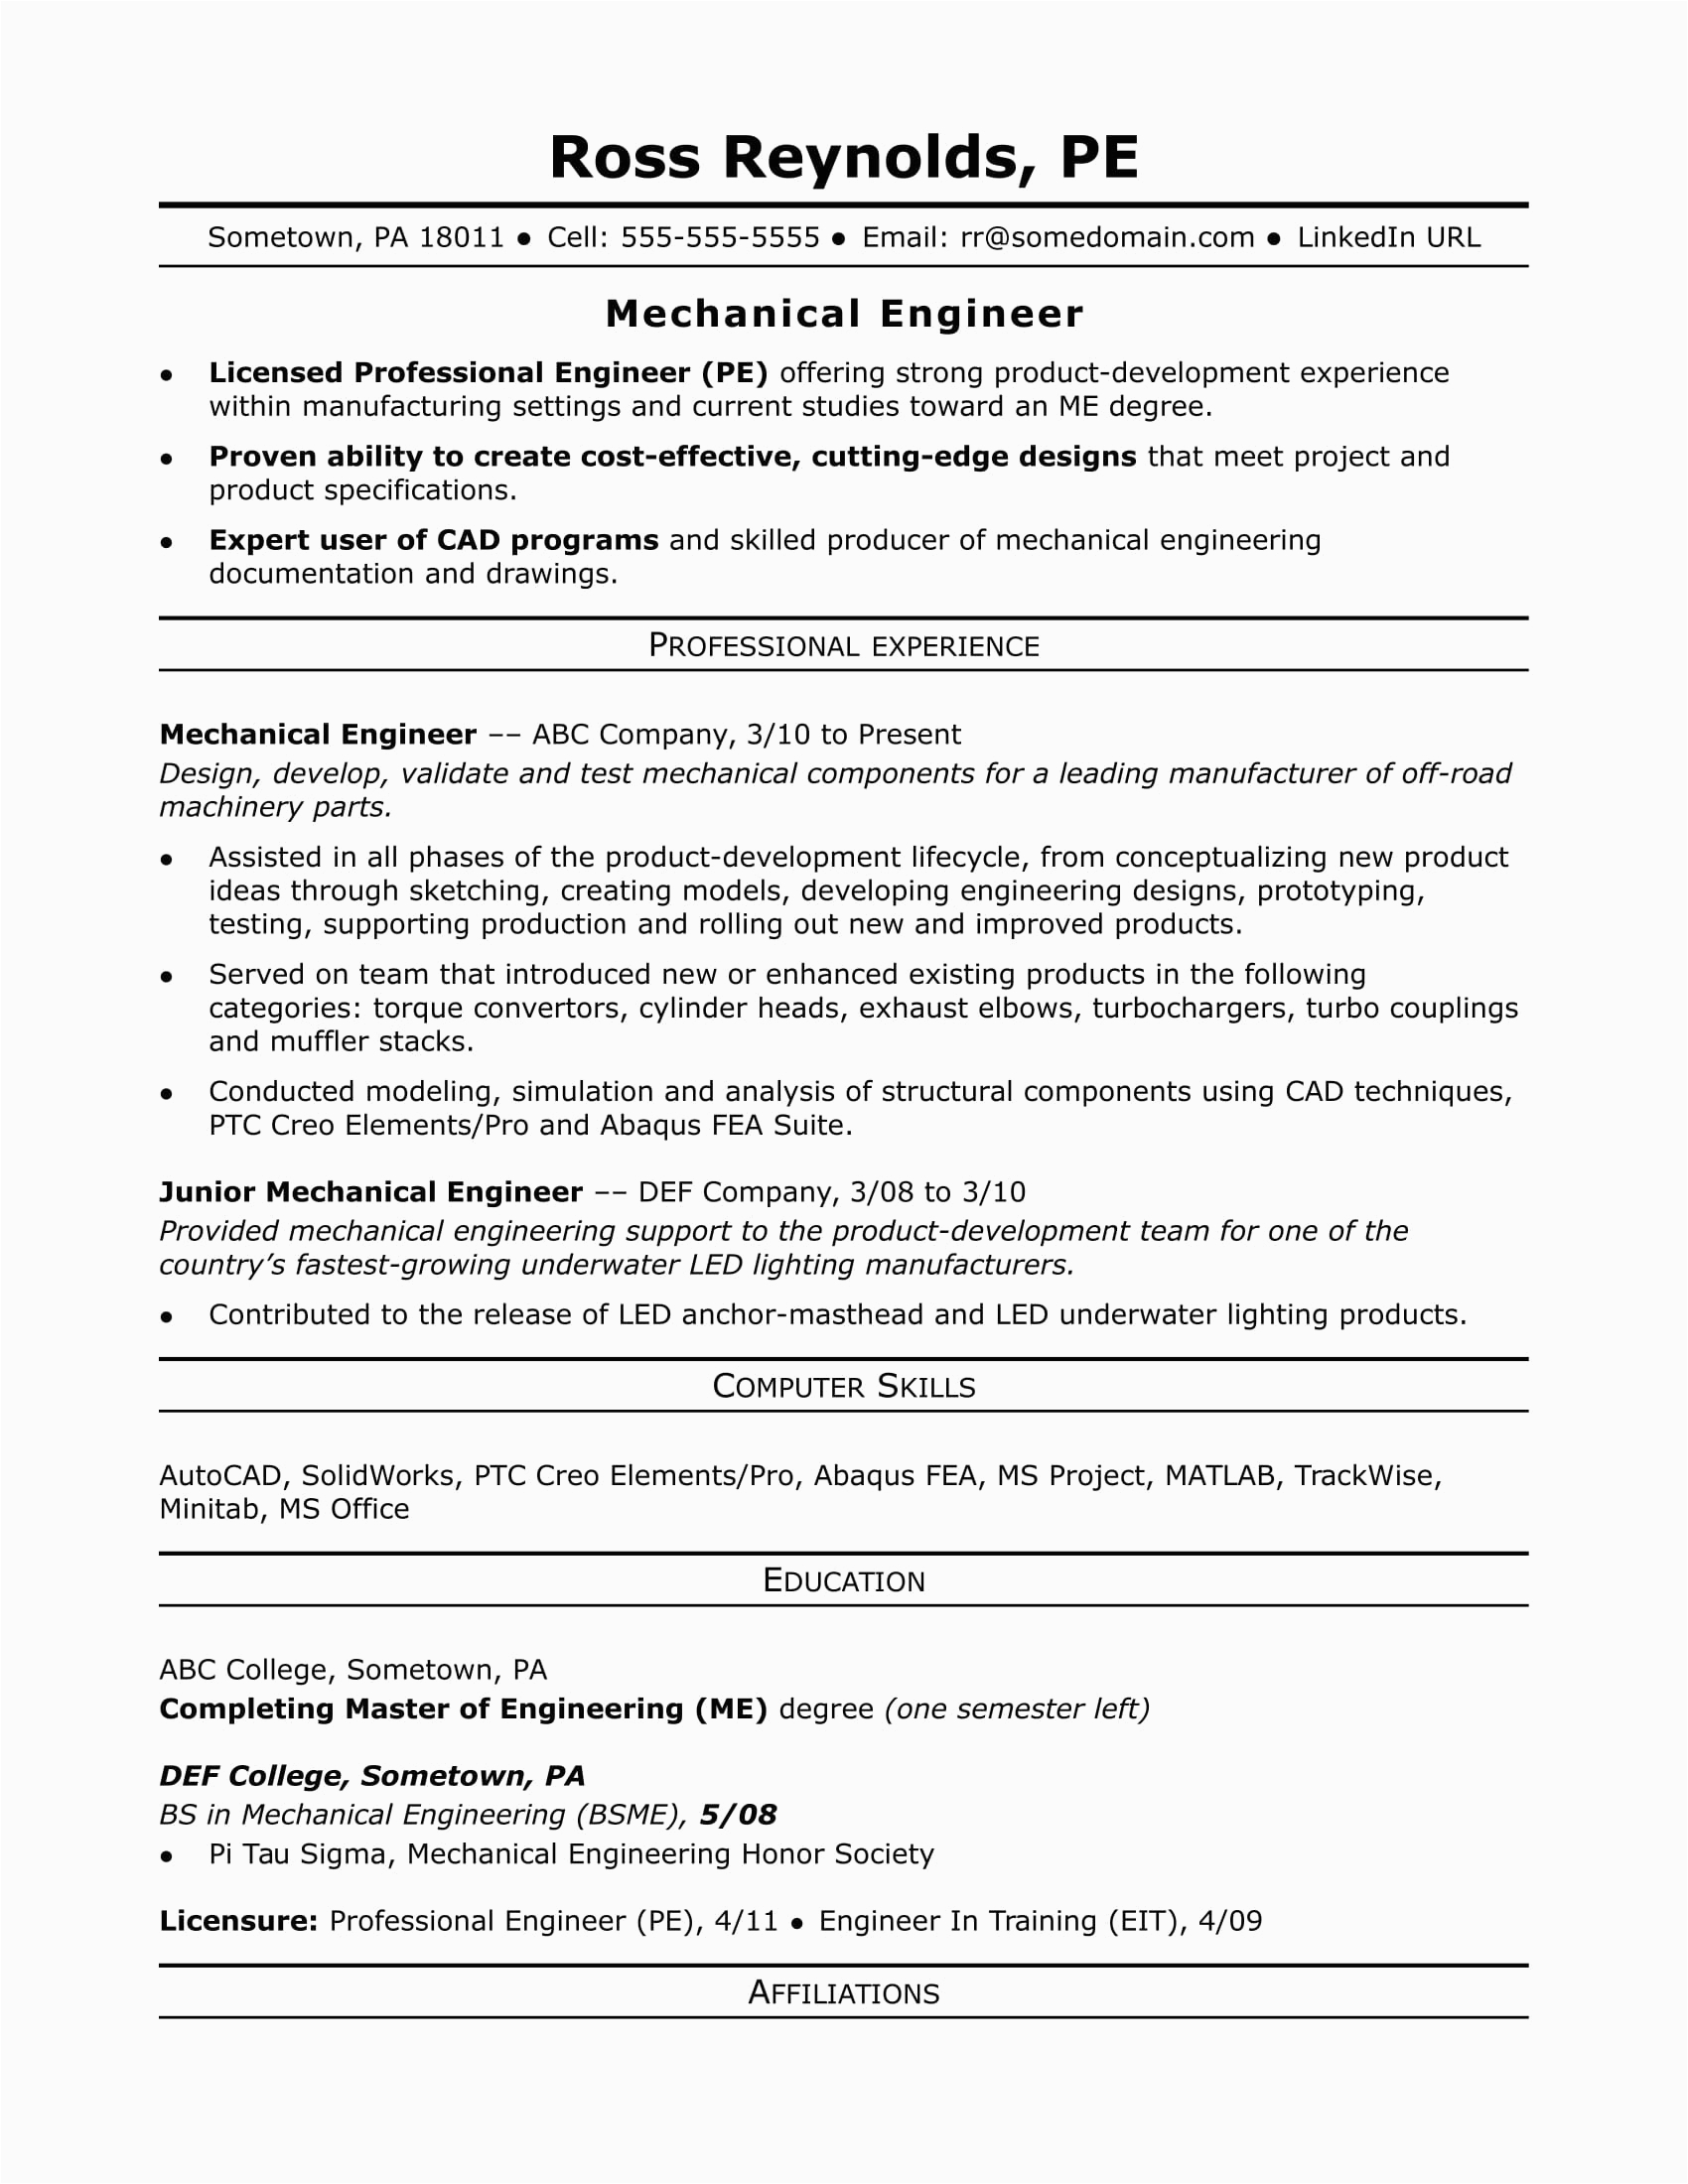 Sample Resume for Mechanical Engineer Professional Sample Resume for A Midlevel Mechanical Engineer